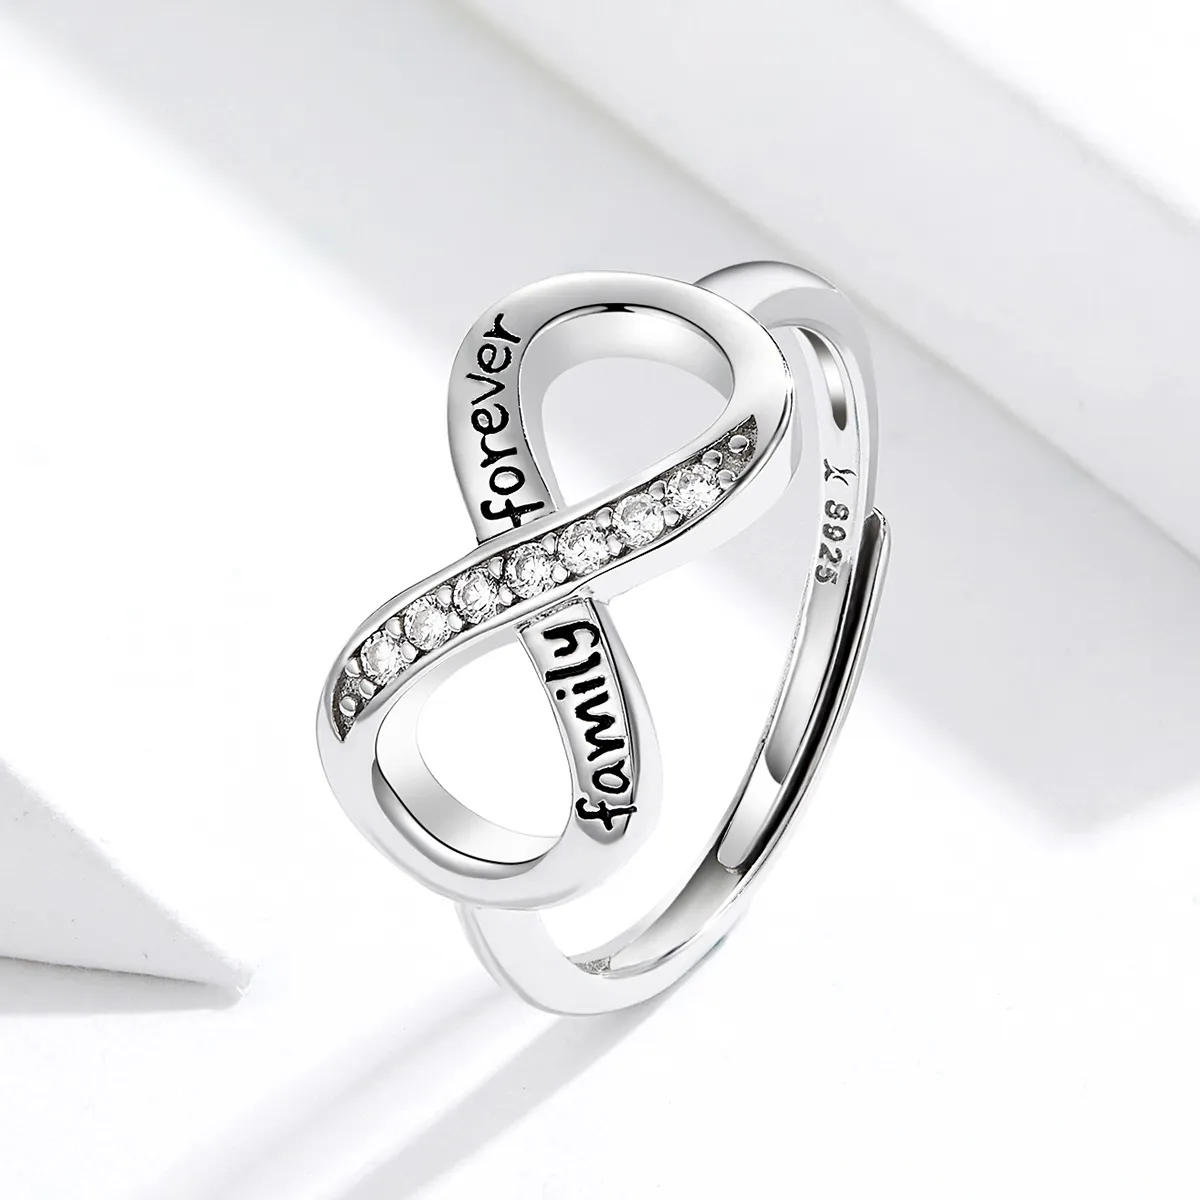 Pandora Style Silver Endless Love Open Ring - SCR579